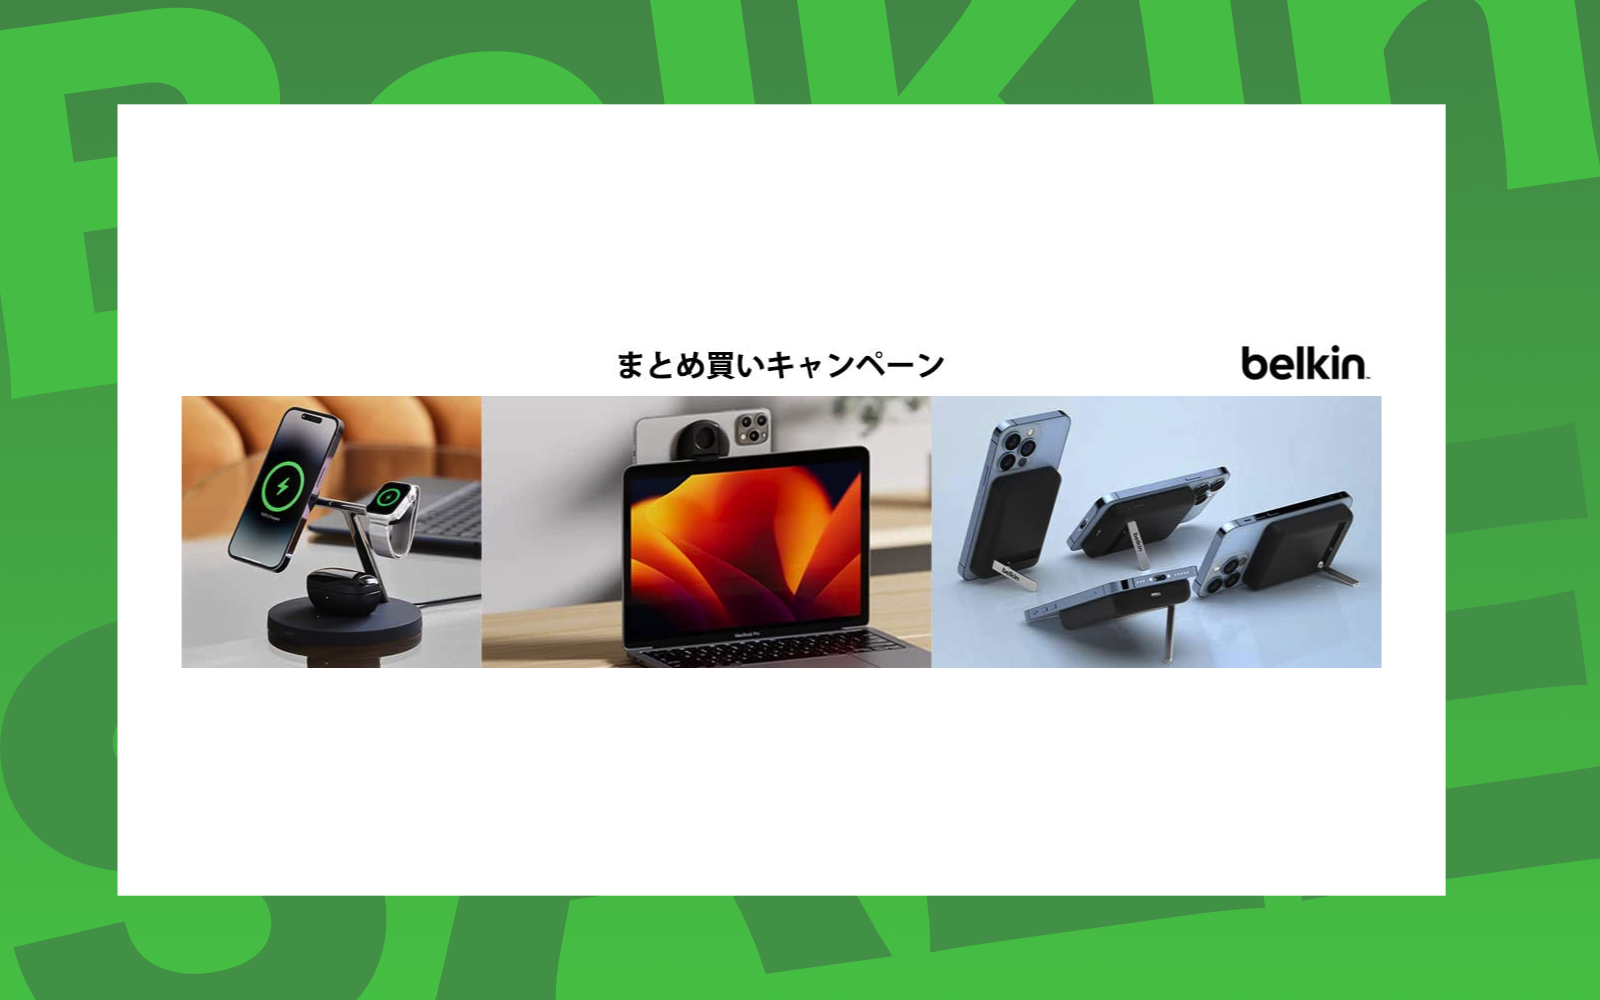 Belkin-Sale-with-apple-products.jpg